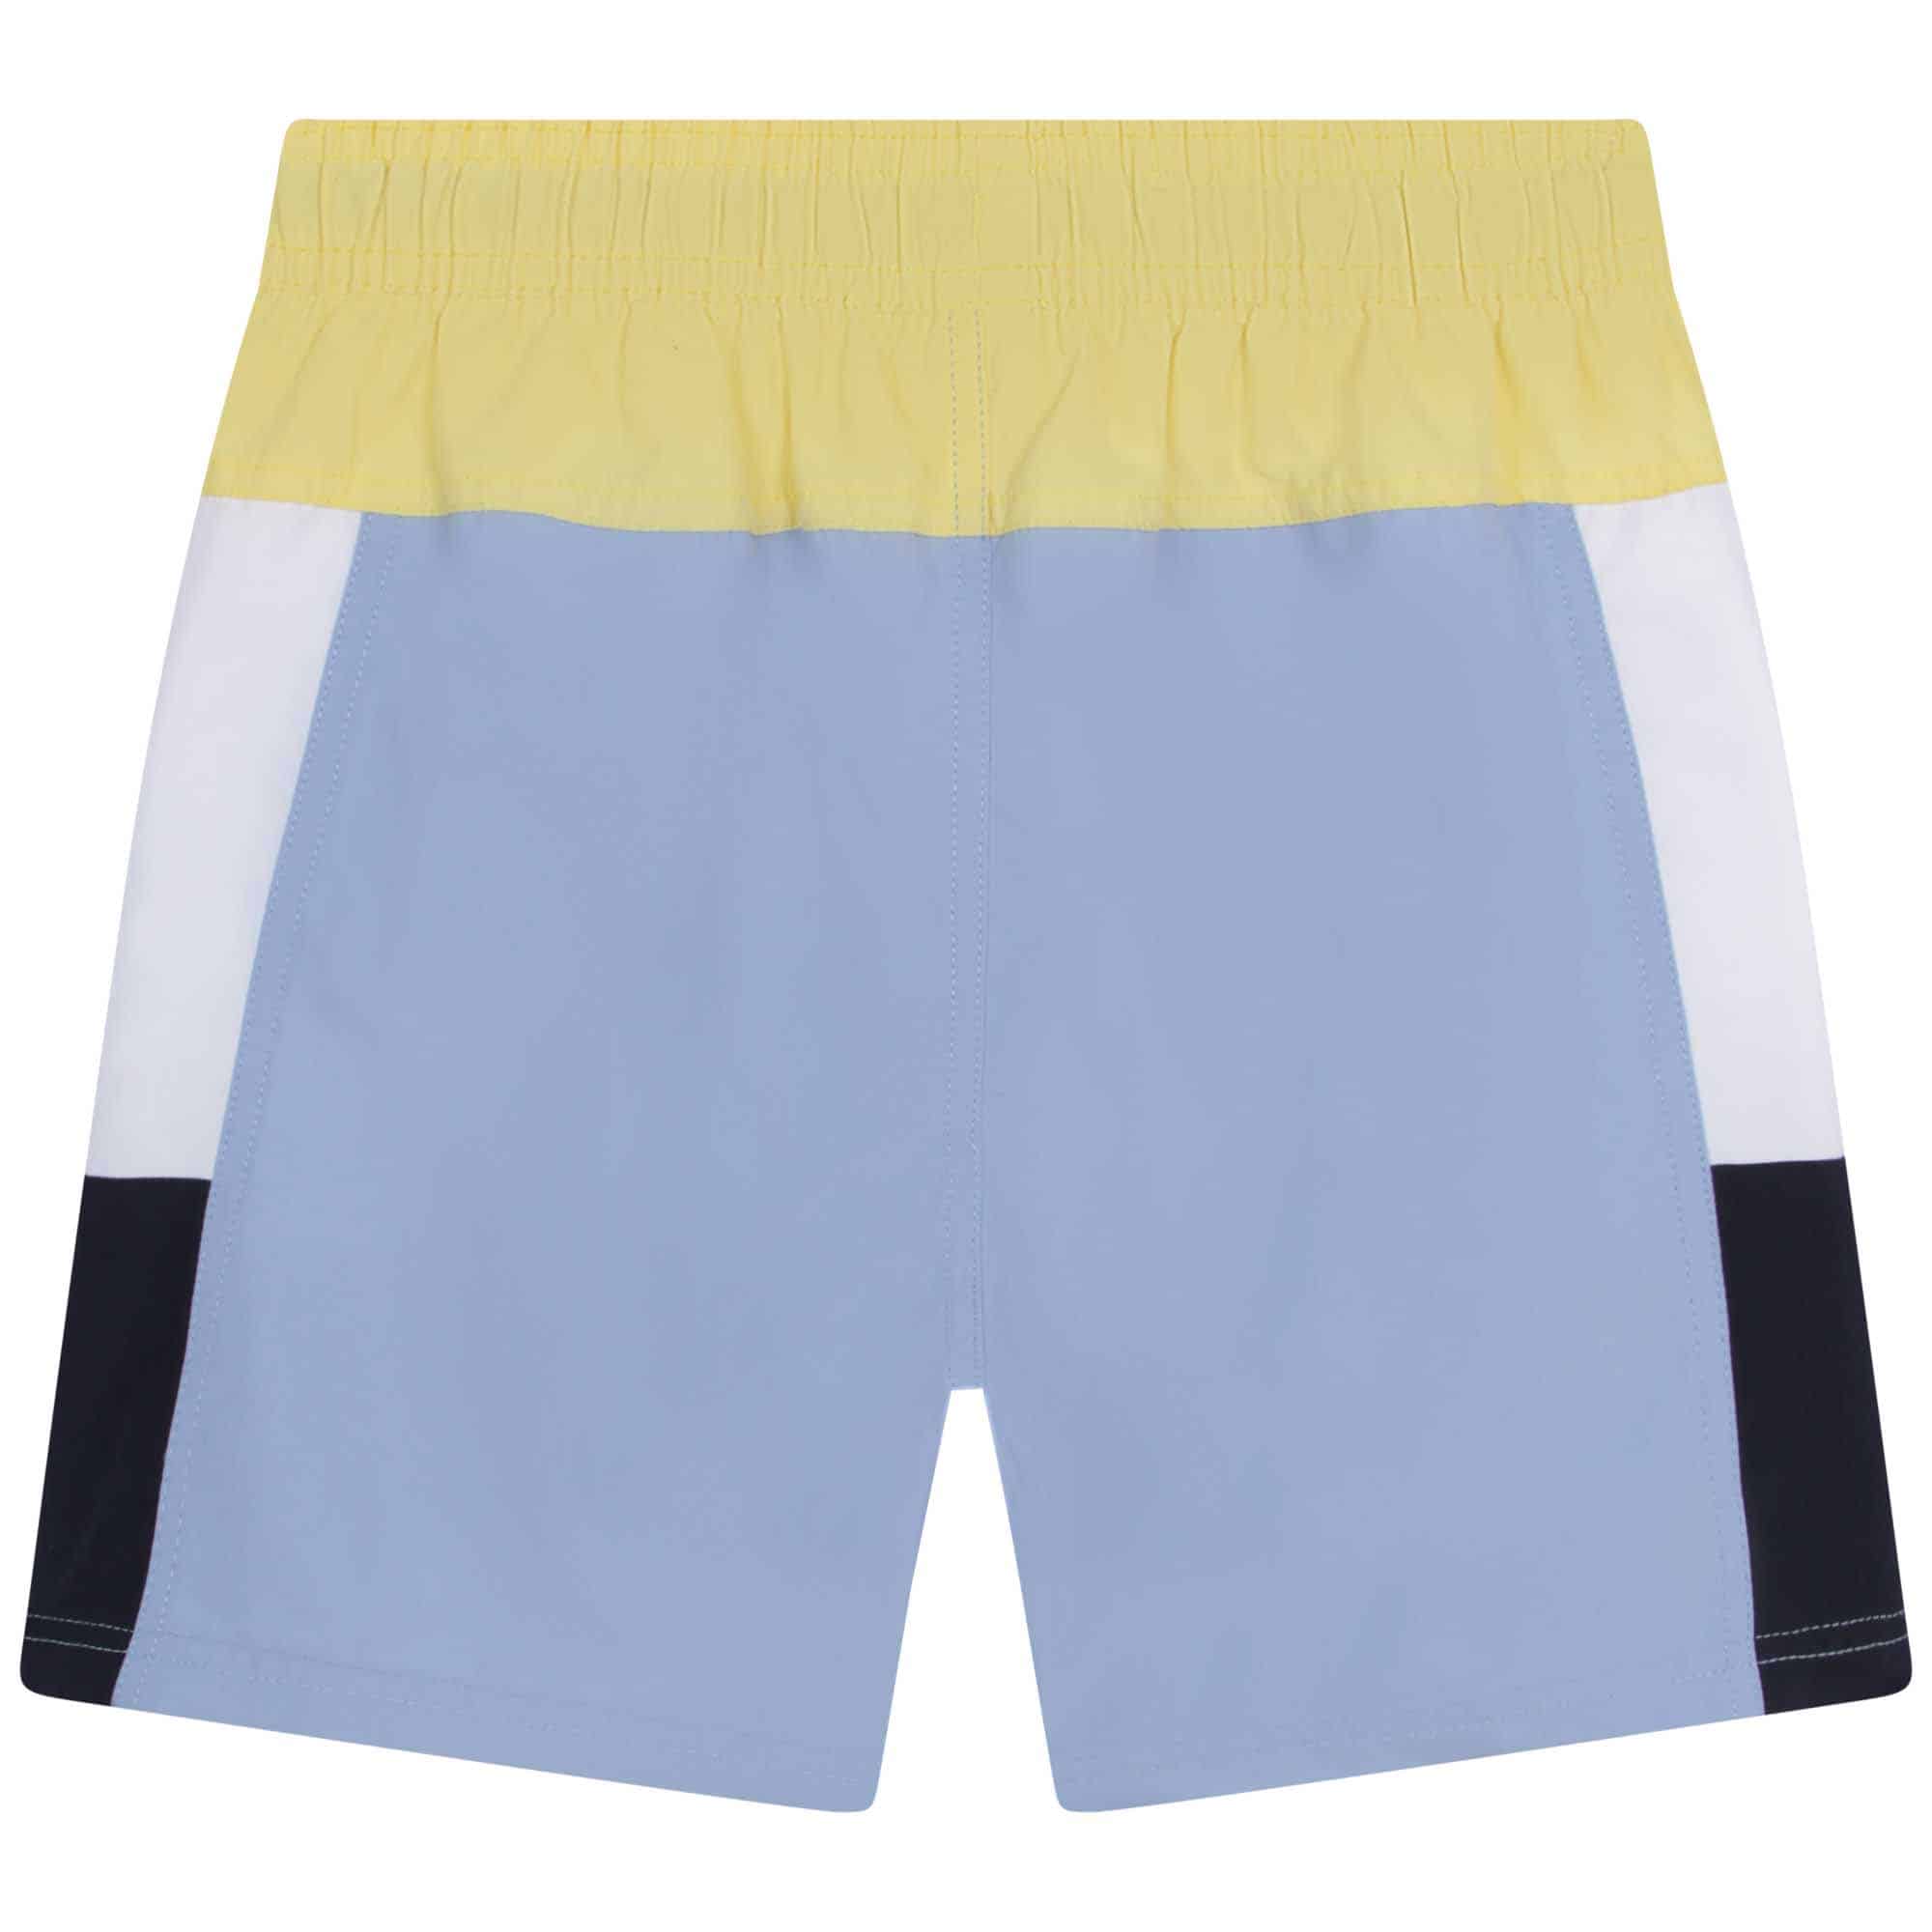 Boss boys shorts in blue, lemon, black and white back view